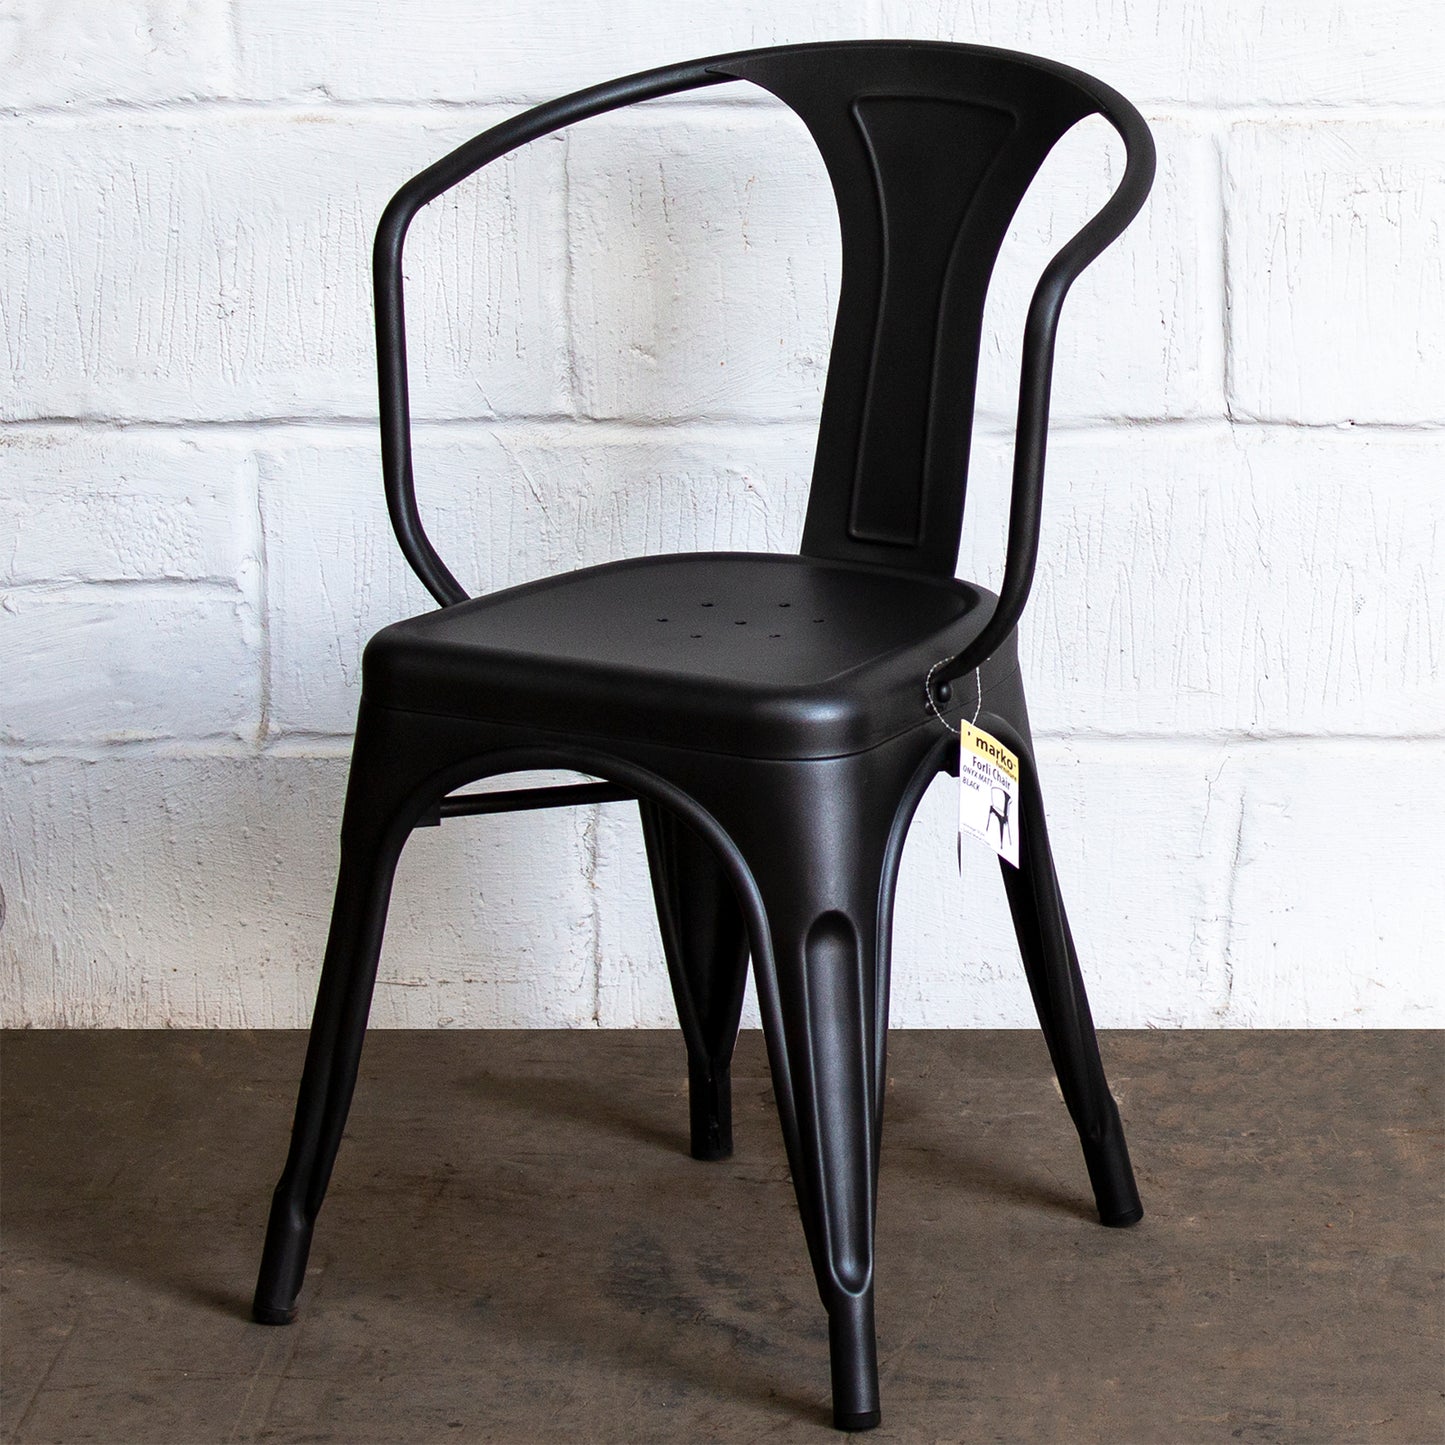 5PC Belvedere Table Forli & Siena Chairs Set - Onyx Matt Black